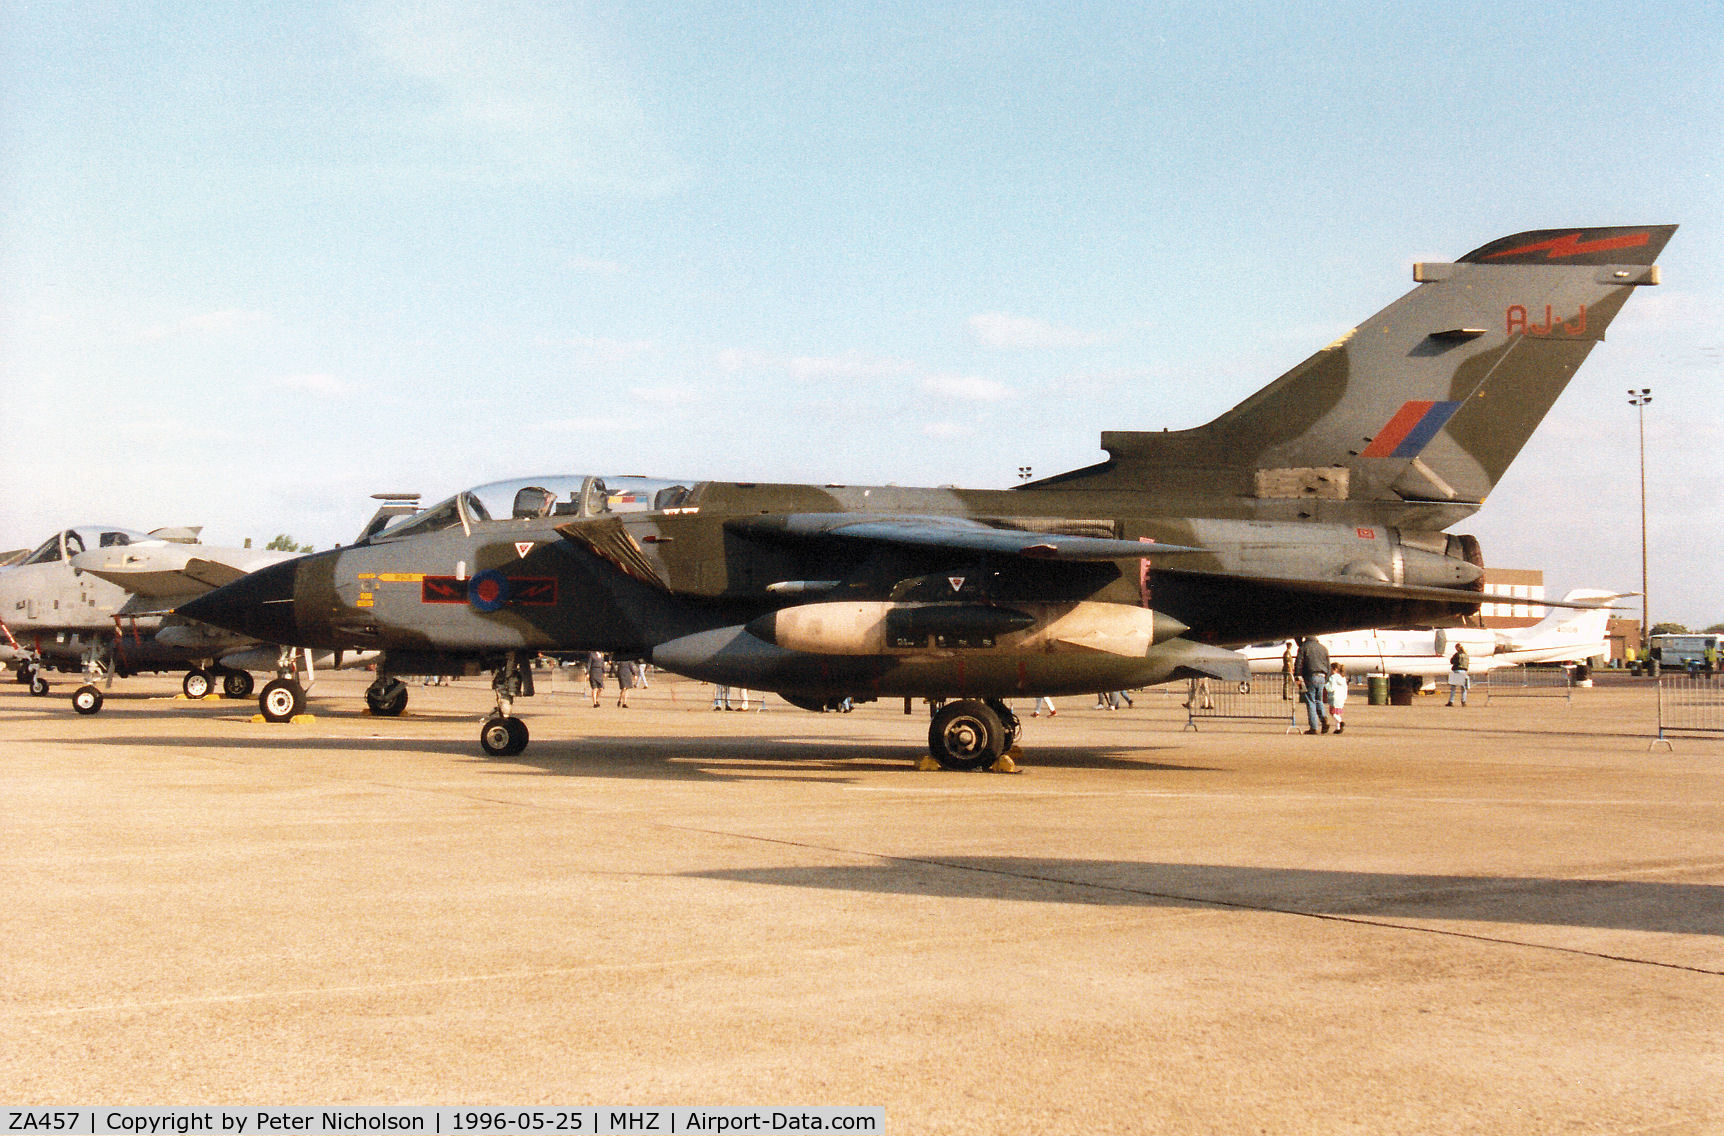 ZA457, 1983 Panavia Tornado GR.1 C/N 259/BS087/3123, Tornado GR.1 of RAF Lossiemouth's 617 Squadron on display at the 1996 RAF Mildenhall Air Fete.